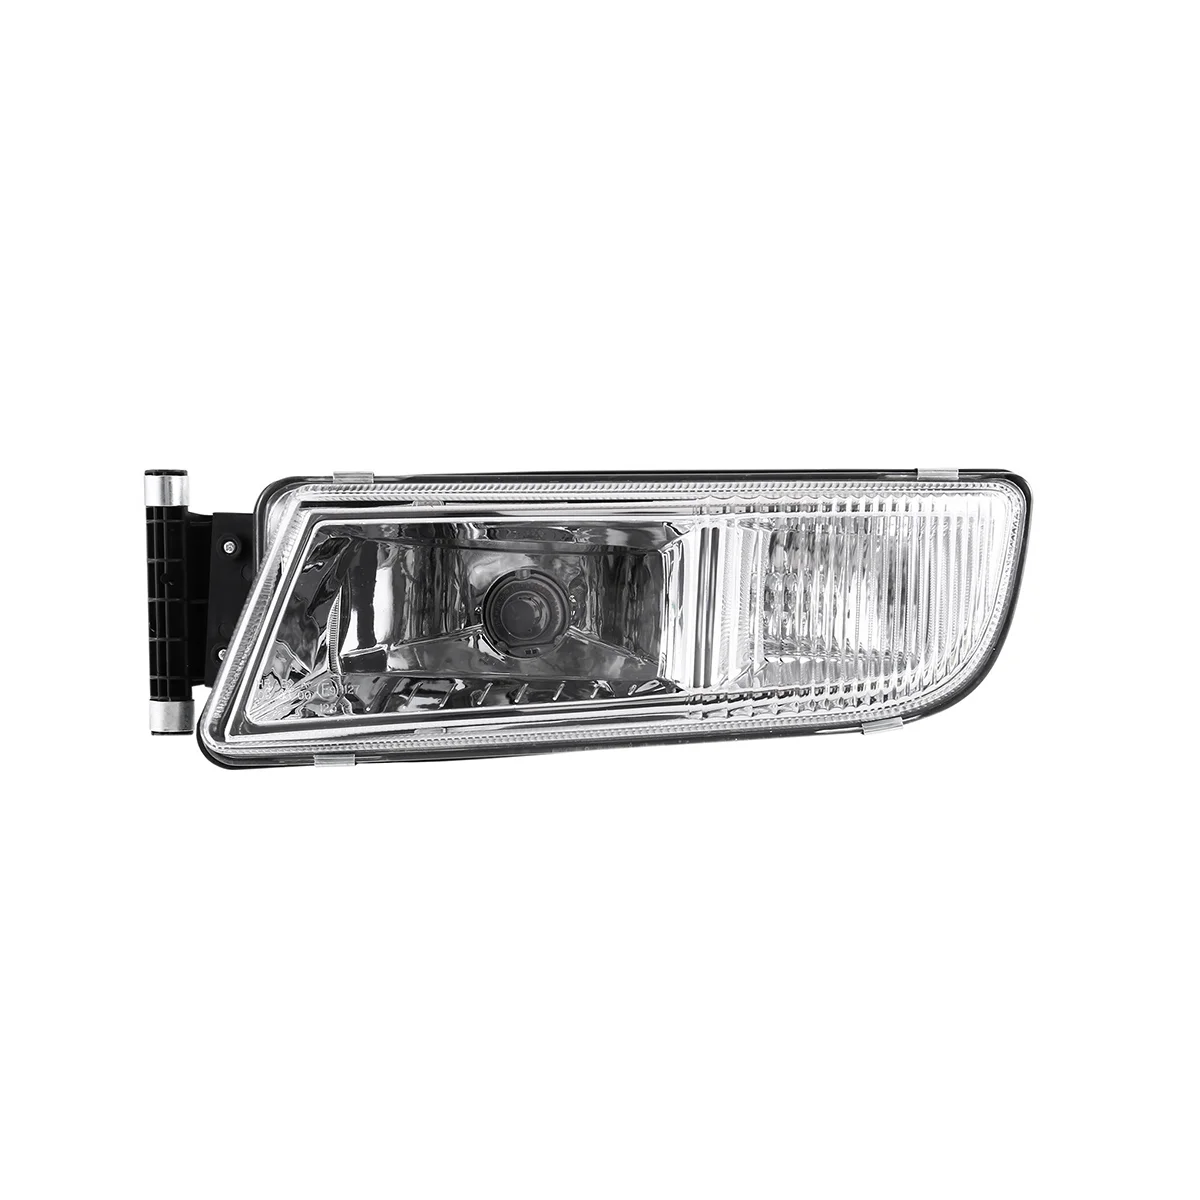 

Trailer Truck Fog Lamp Daytime Running Lights Head Lights for MAN TGX/TGS/TGL Truck 81251016522/81251016521